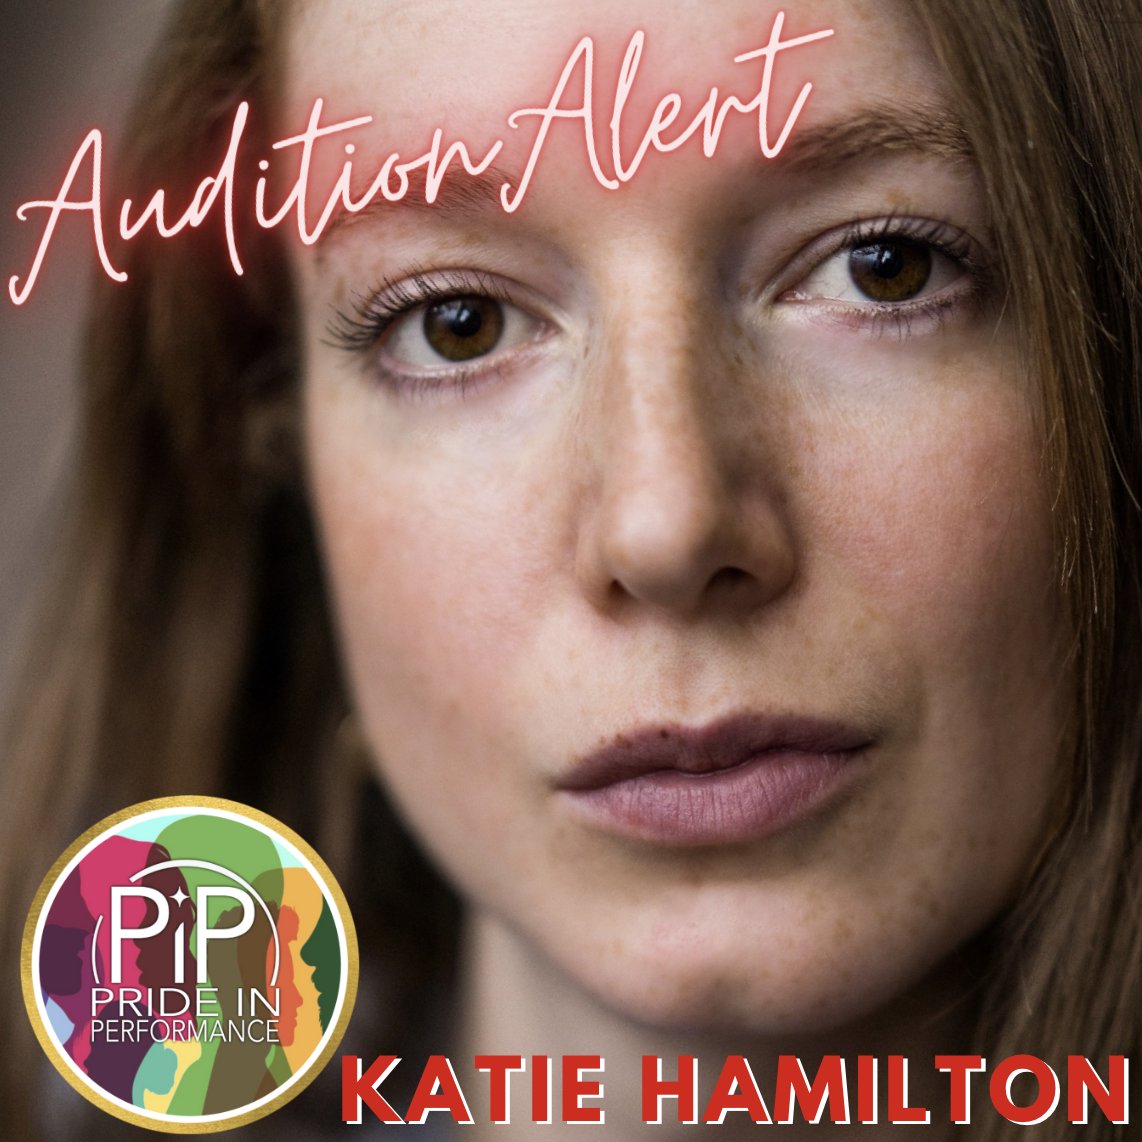 🚨 Audition Alert For KATIE HAMILTON 🚨
@katannahamilton enjoying a lovely #SelfTape #Casting for a fantastic #Theatre #Tour
spotlight.com/0852-8970-6503
#PositivelyPiP
#AuditionAlert
#ActorsLife